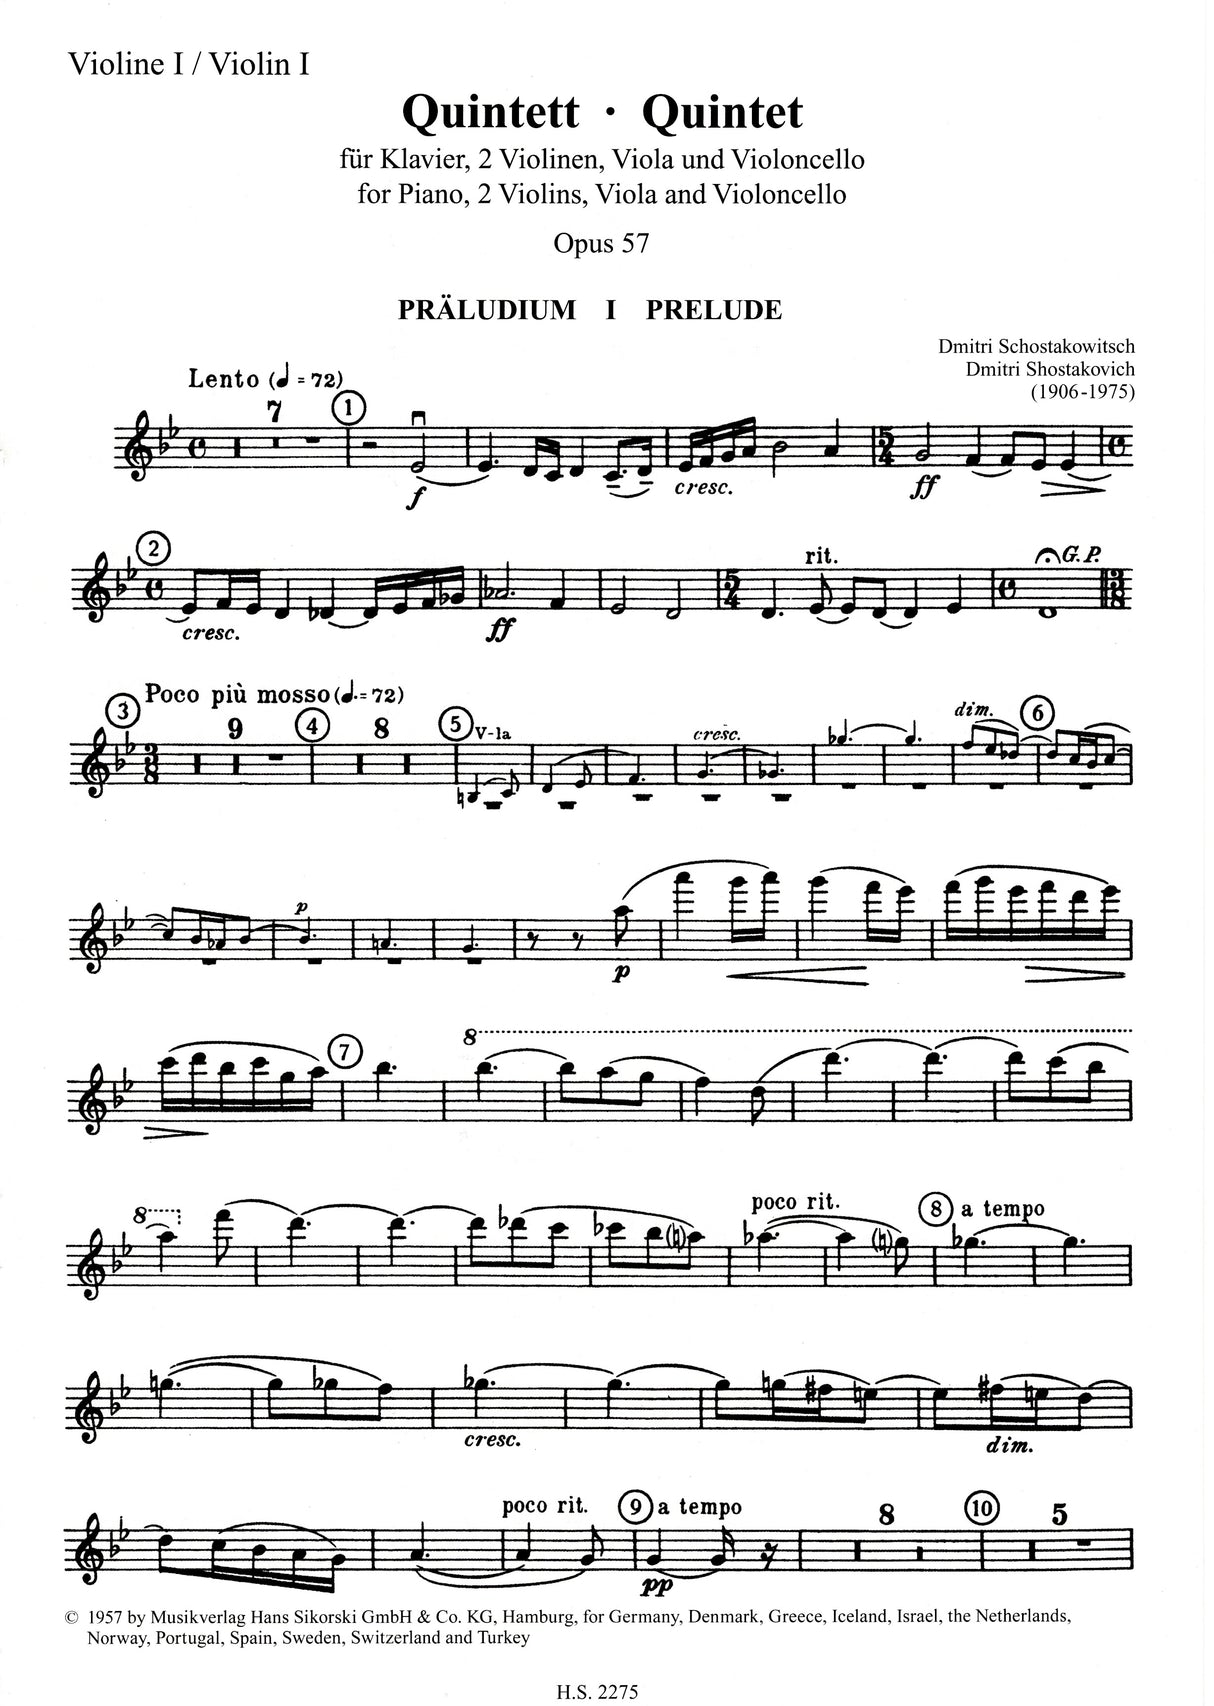 Shostakovich: Piano Quintet in G Minor, Op. 57